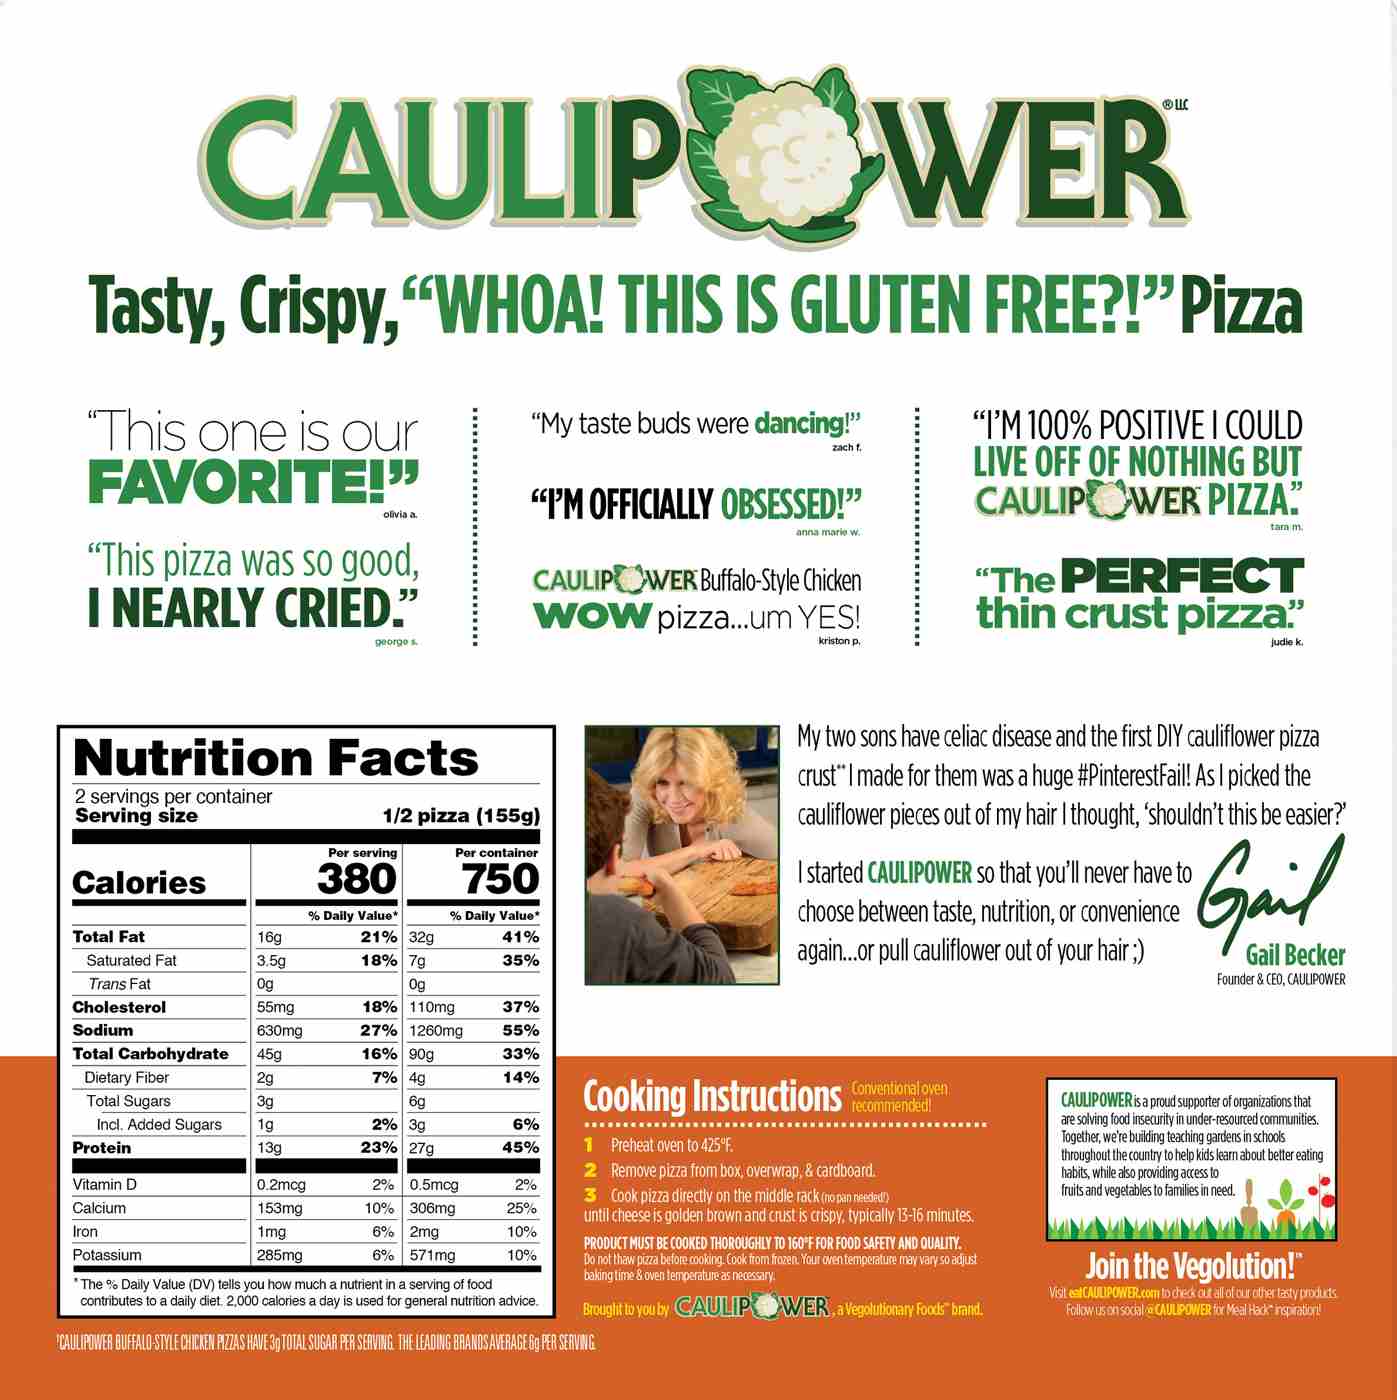 Caulipower Cauliflower Crust Frozen Pizza - Buffalo Style Chicken; image 2 of 2